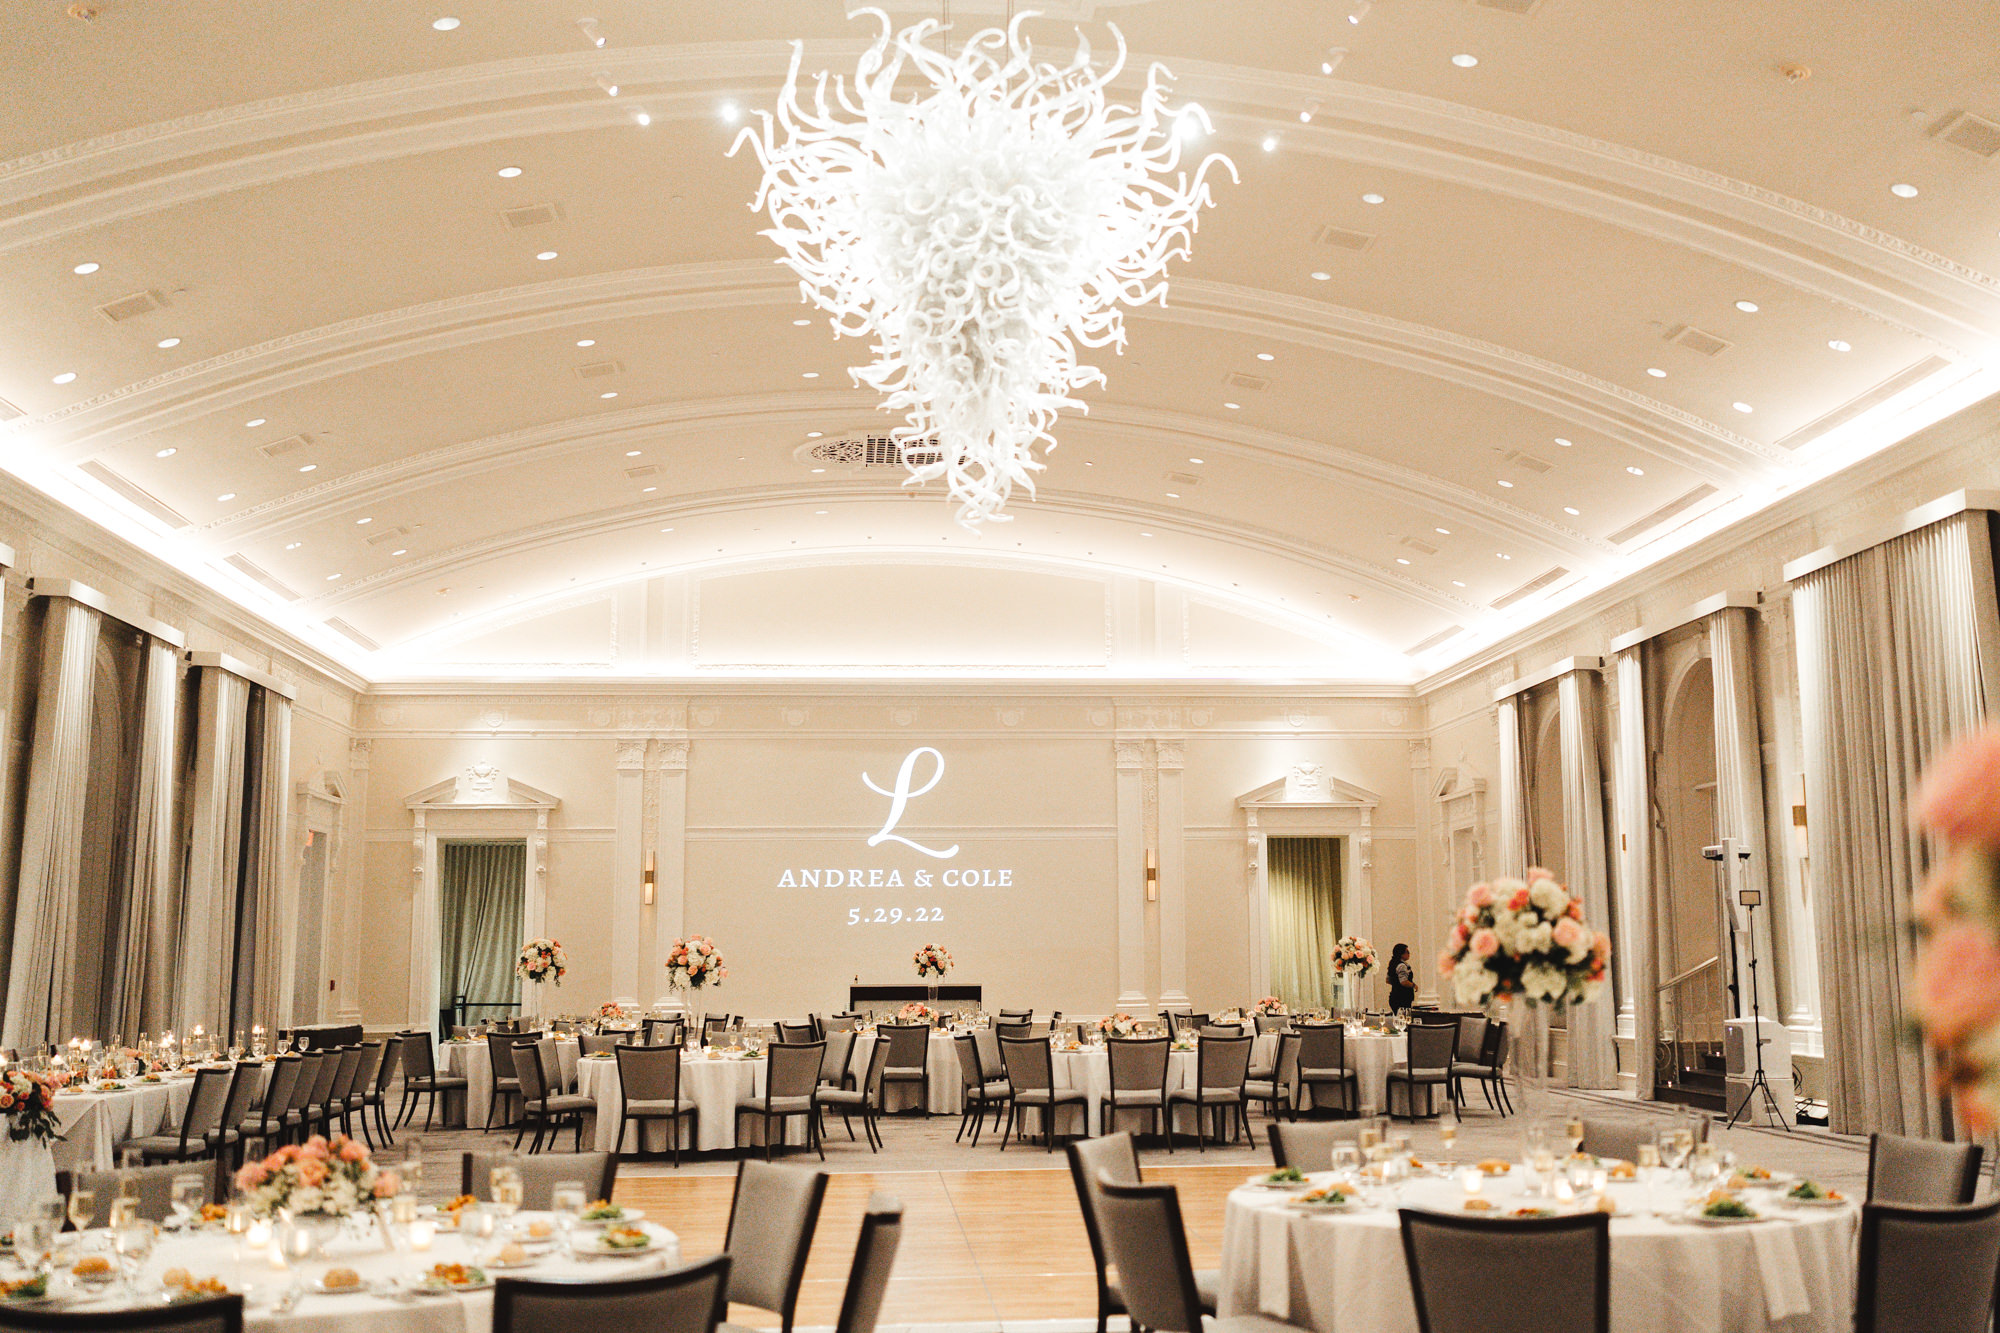 Elegant Indoor Wedding Reception | Personalized Monogram Projector Inspiration